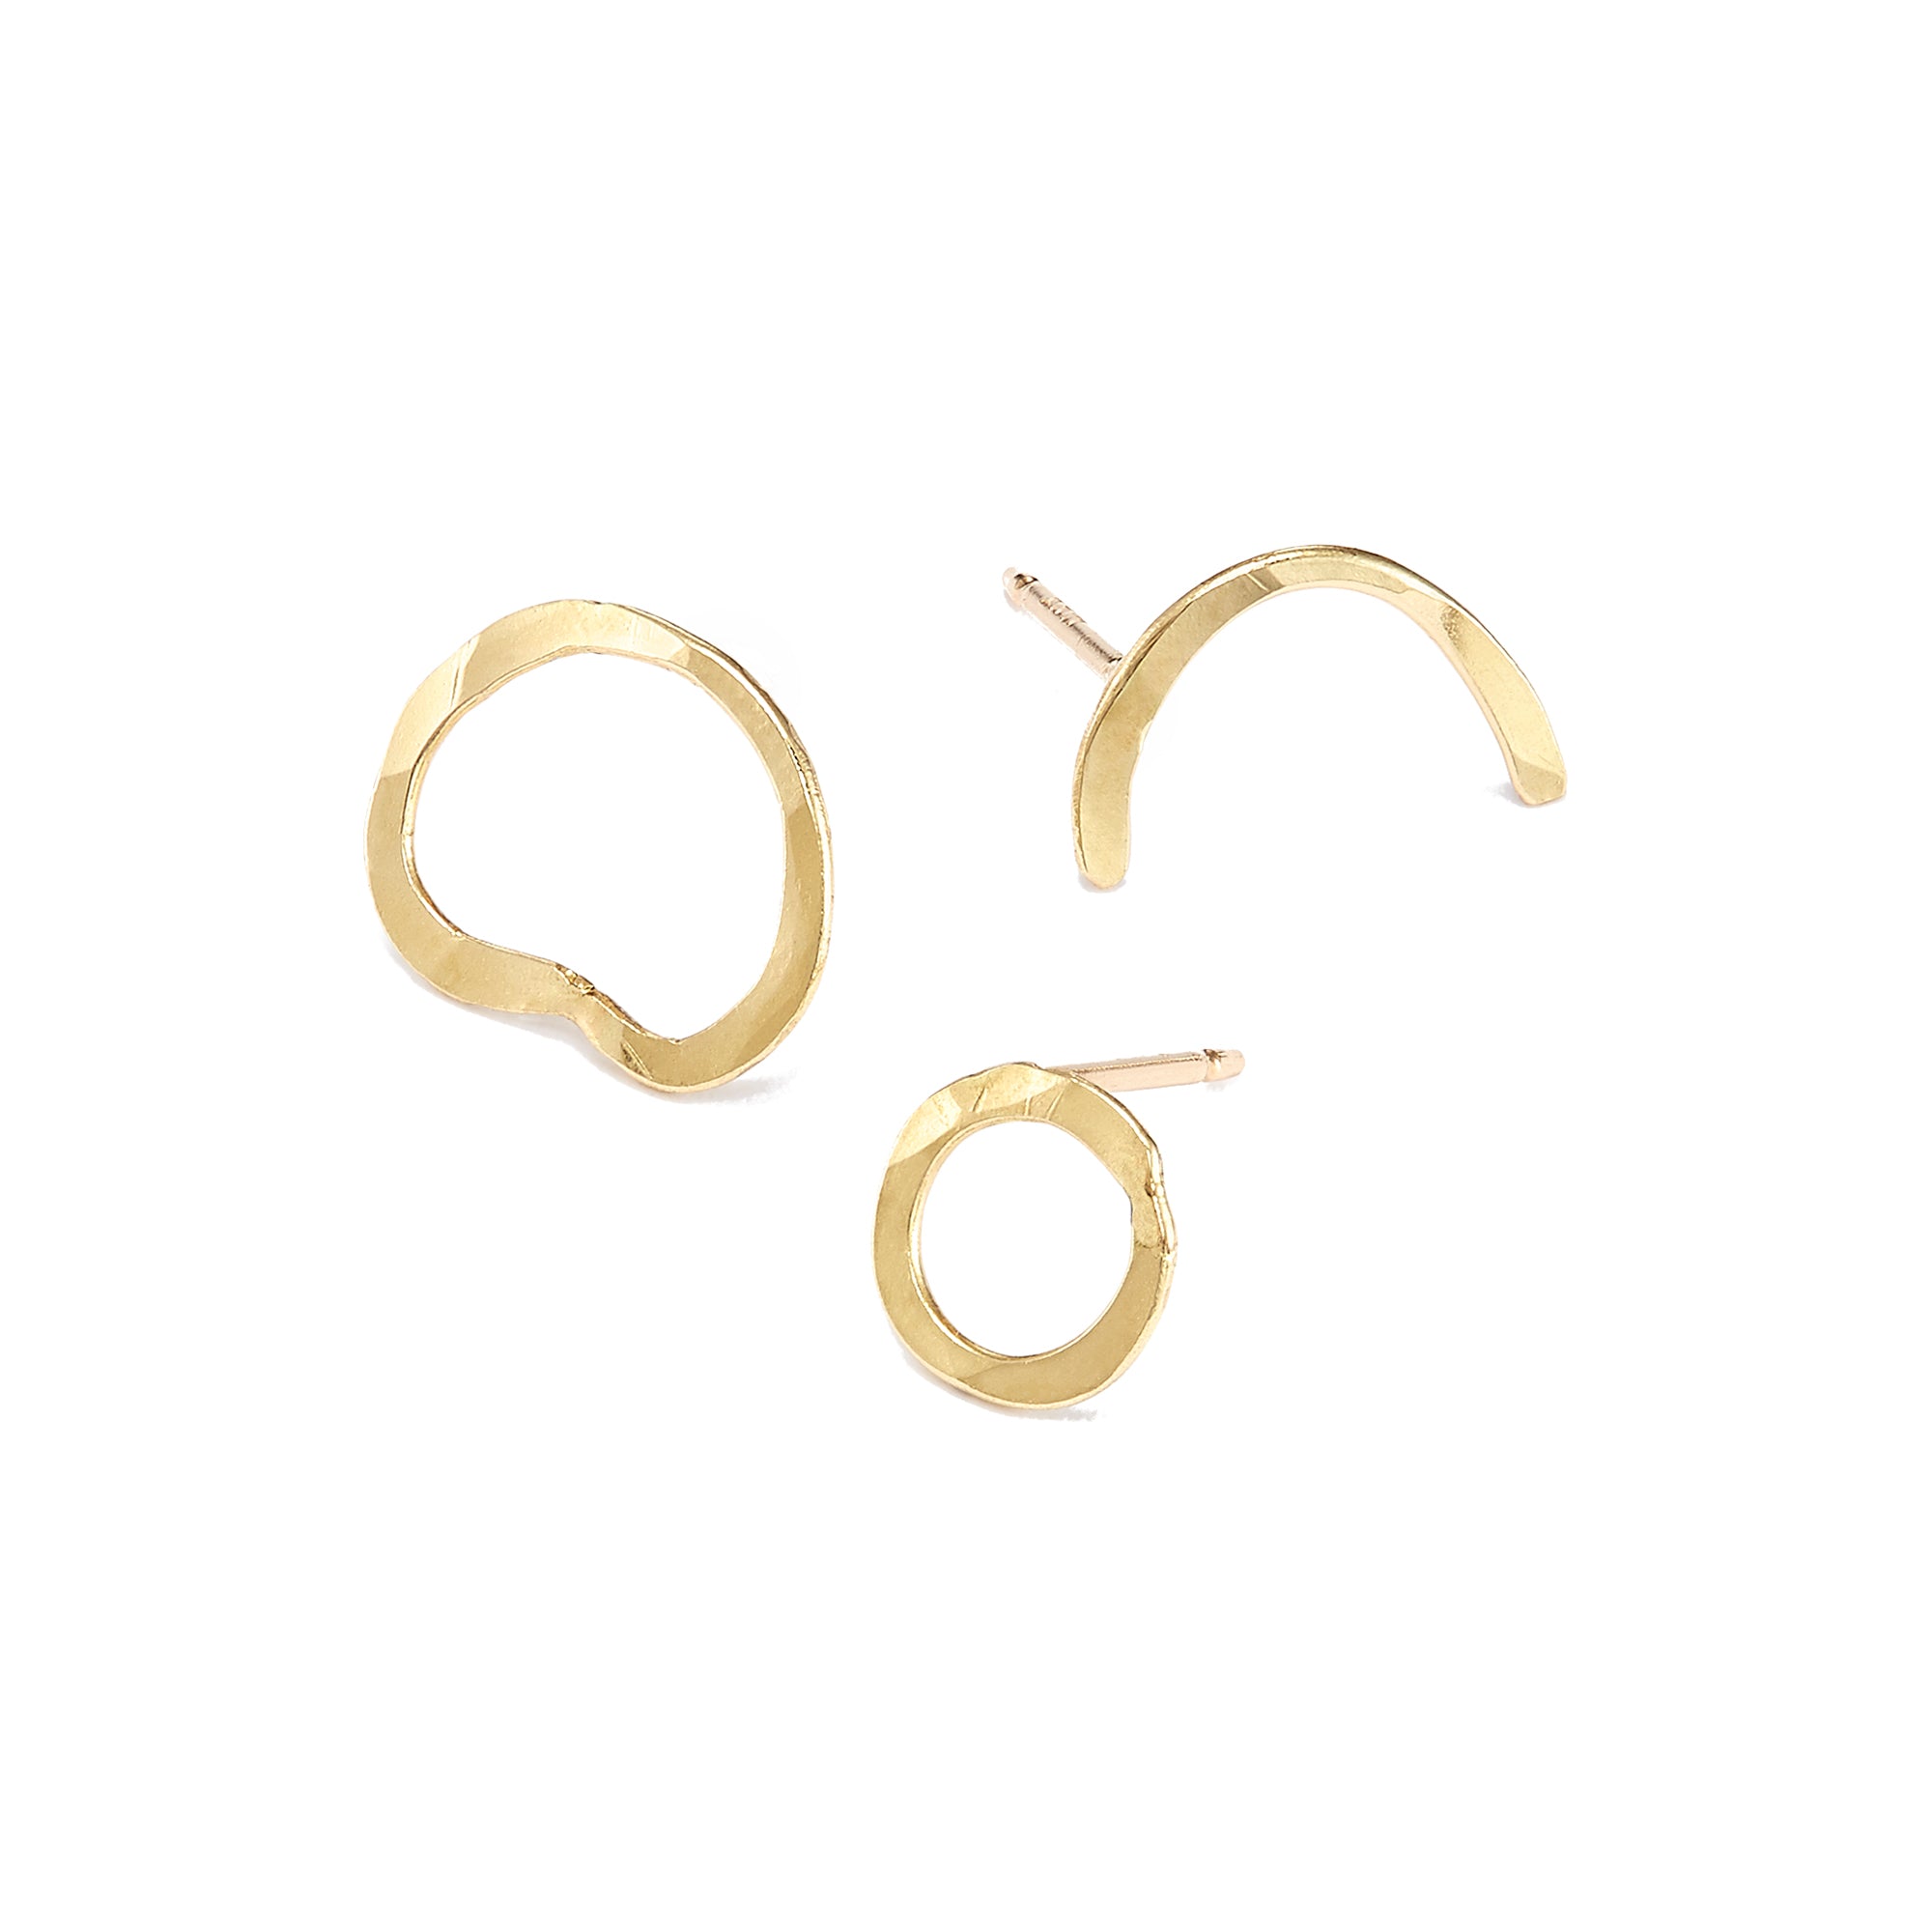 Callen Thompson | Five Borough Multiverse, collaboration earrings in 14k gold 